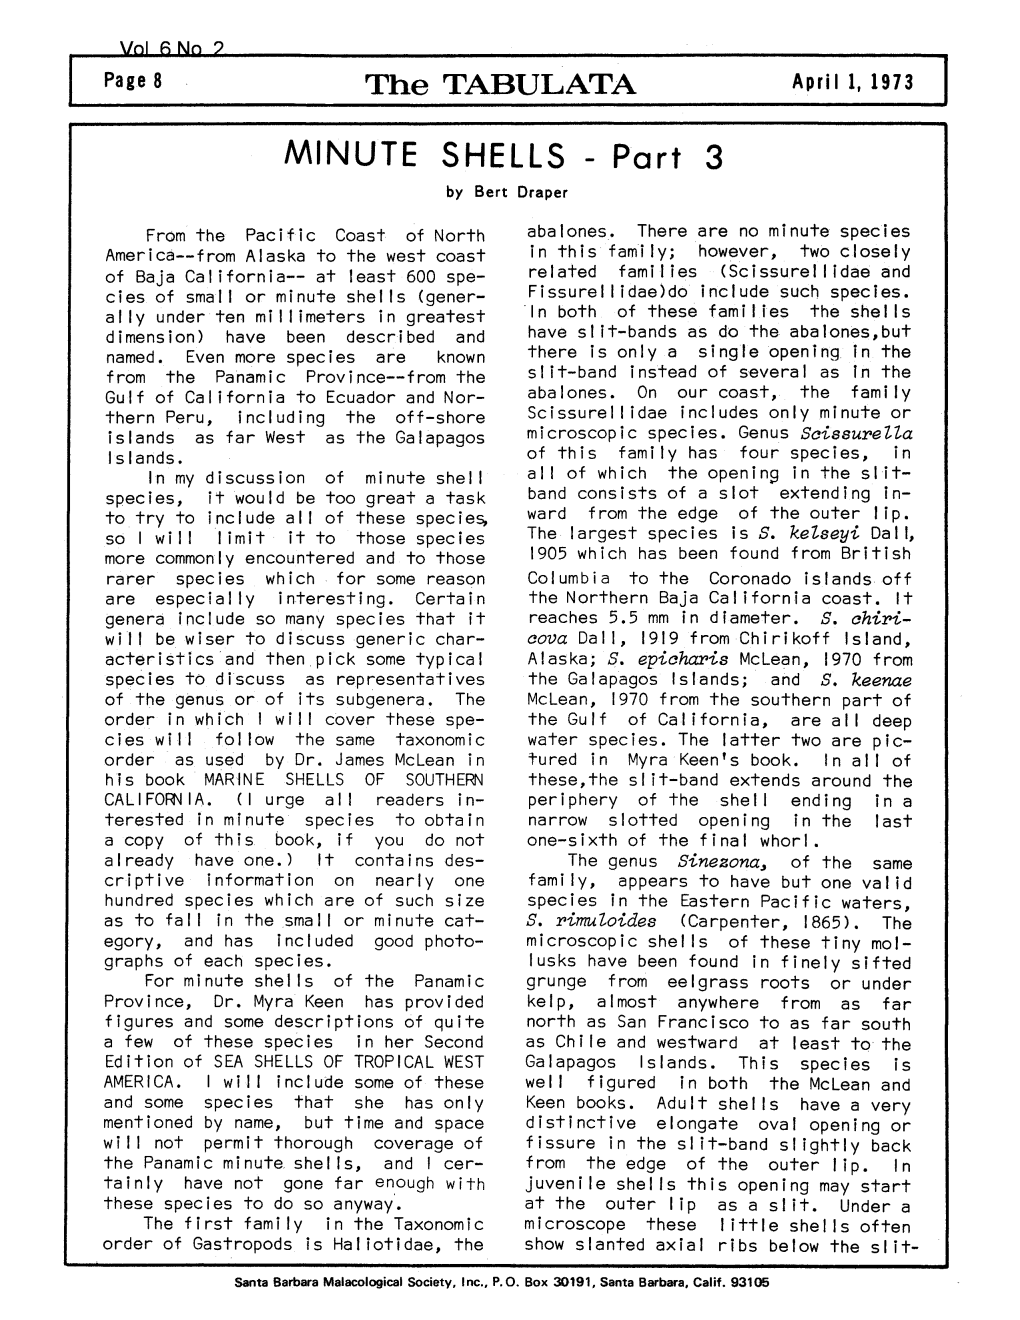 MINUTE SHELLS - Part 3 by Bert Draper